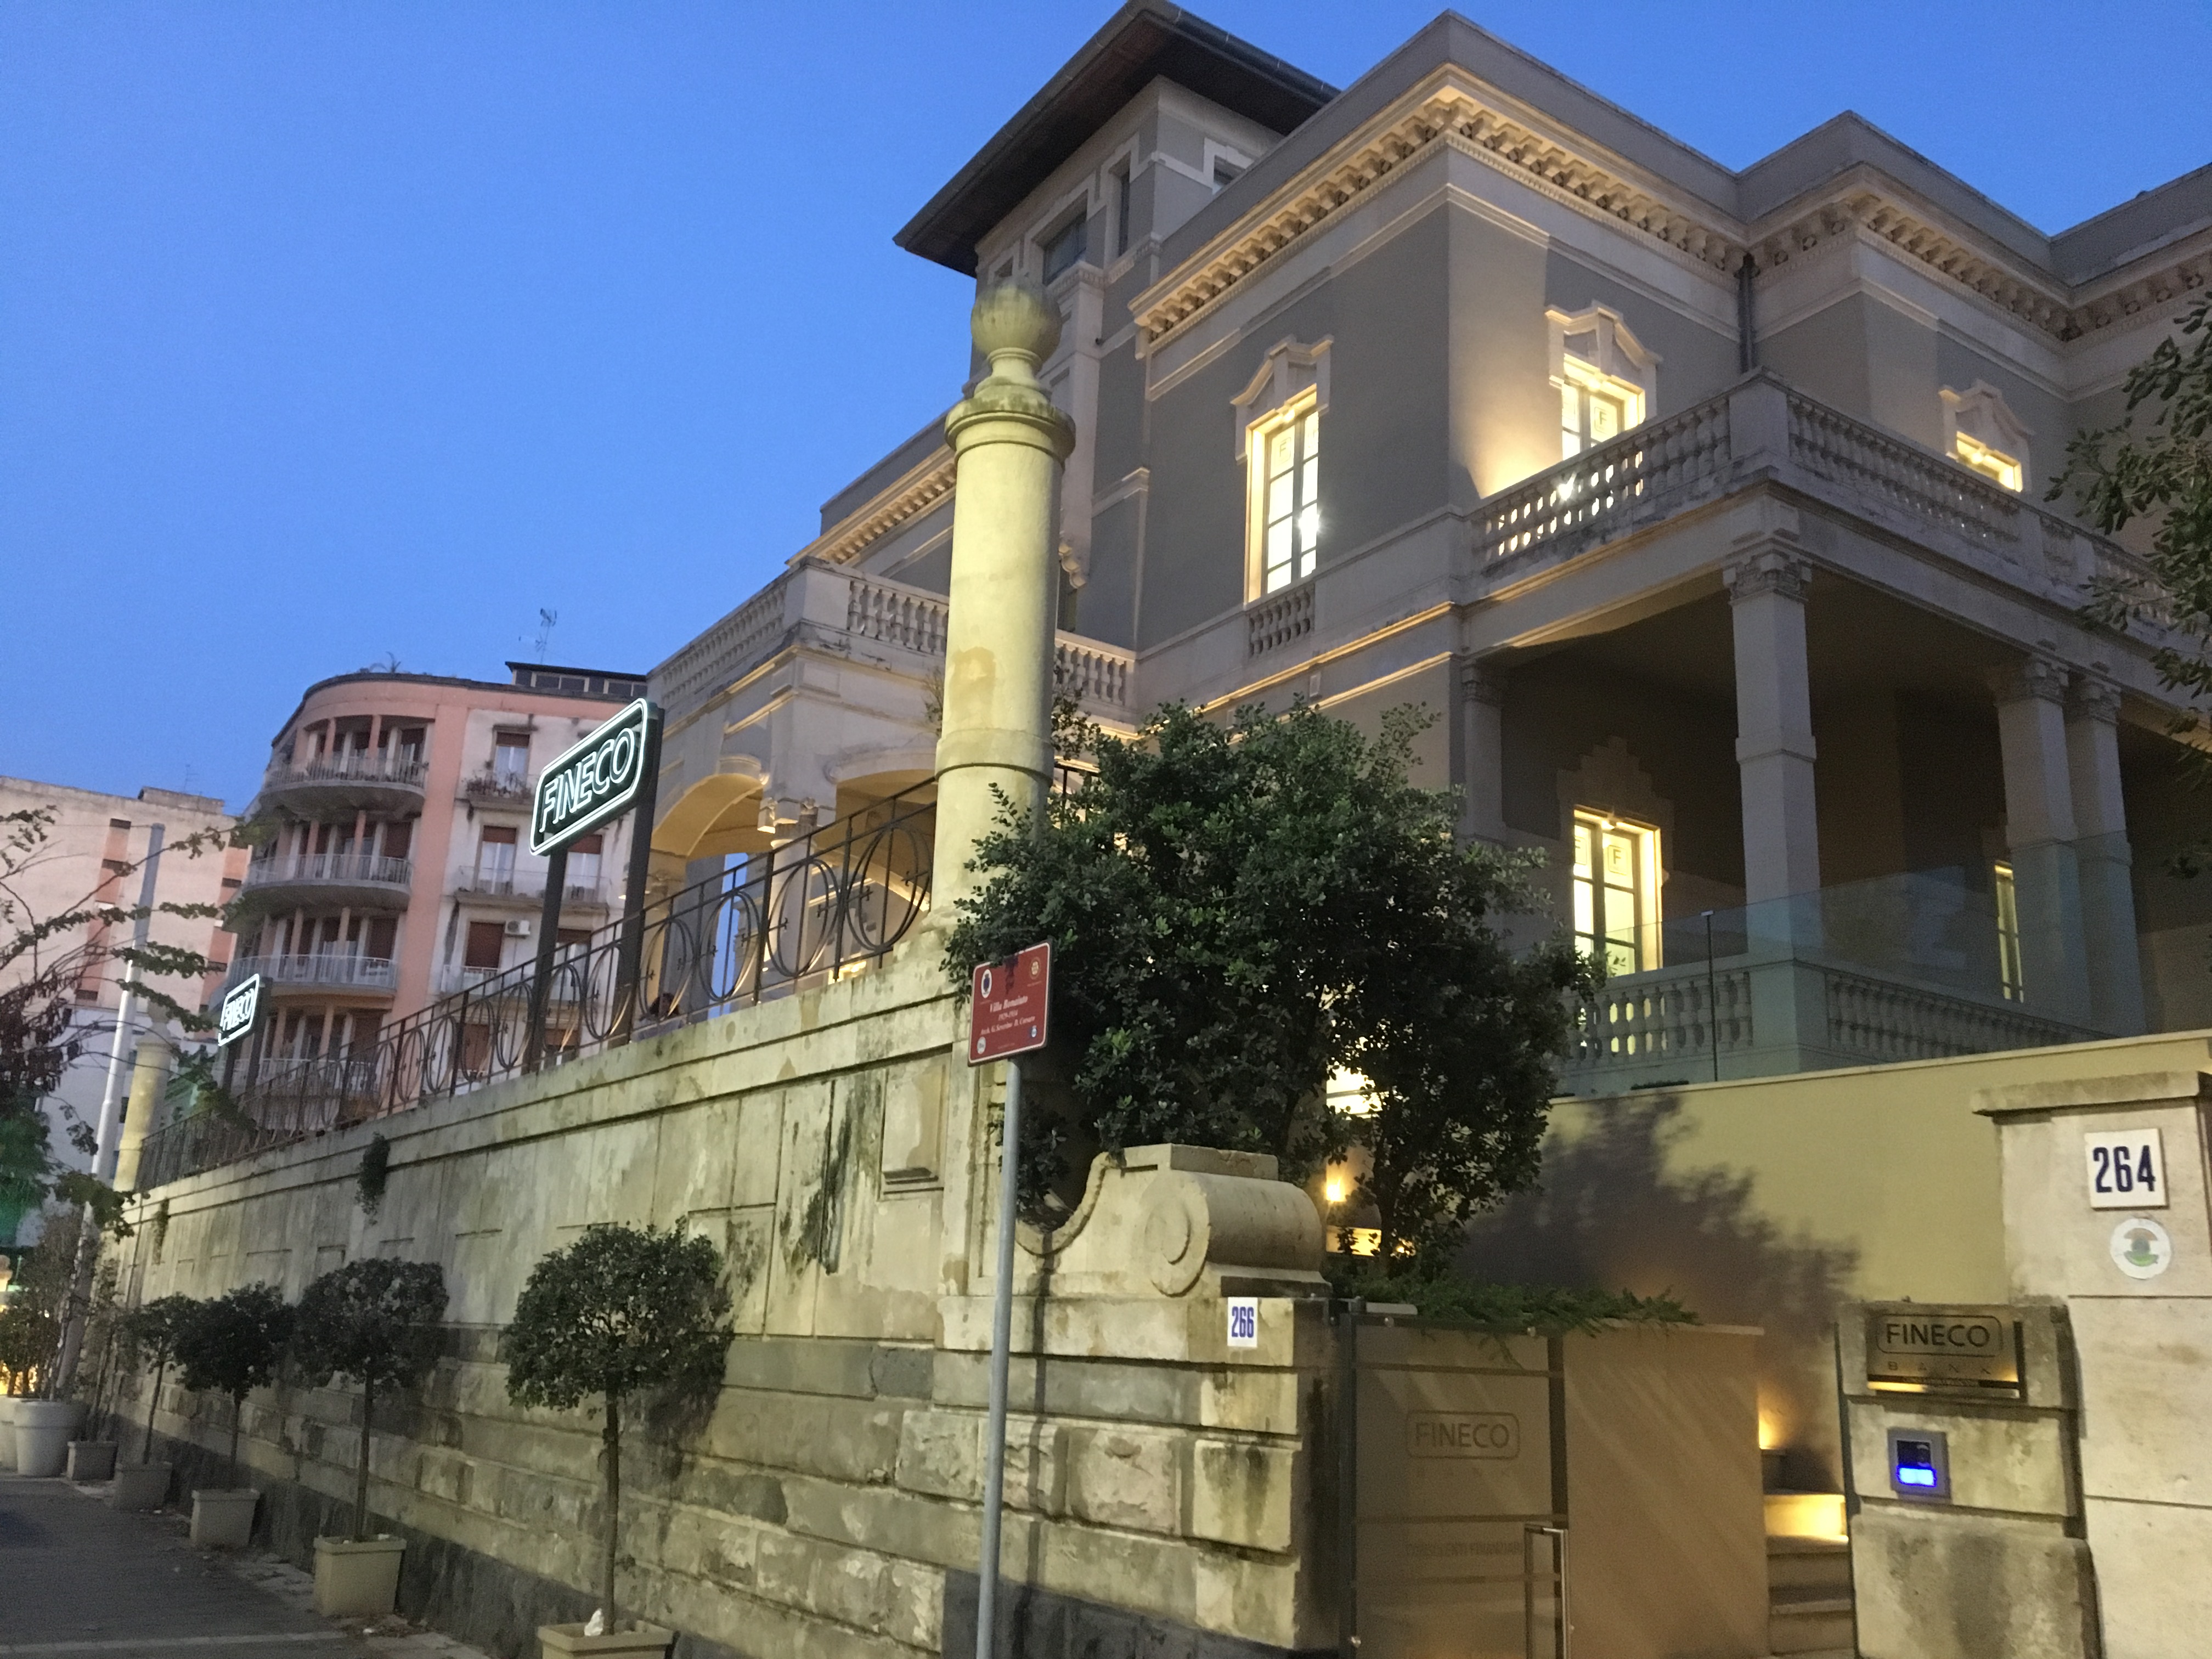 Uffici FINECOBANK Catania – Villa Bonajuto